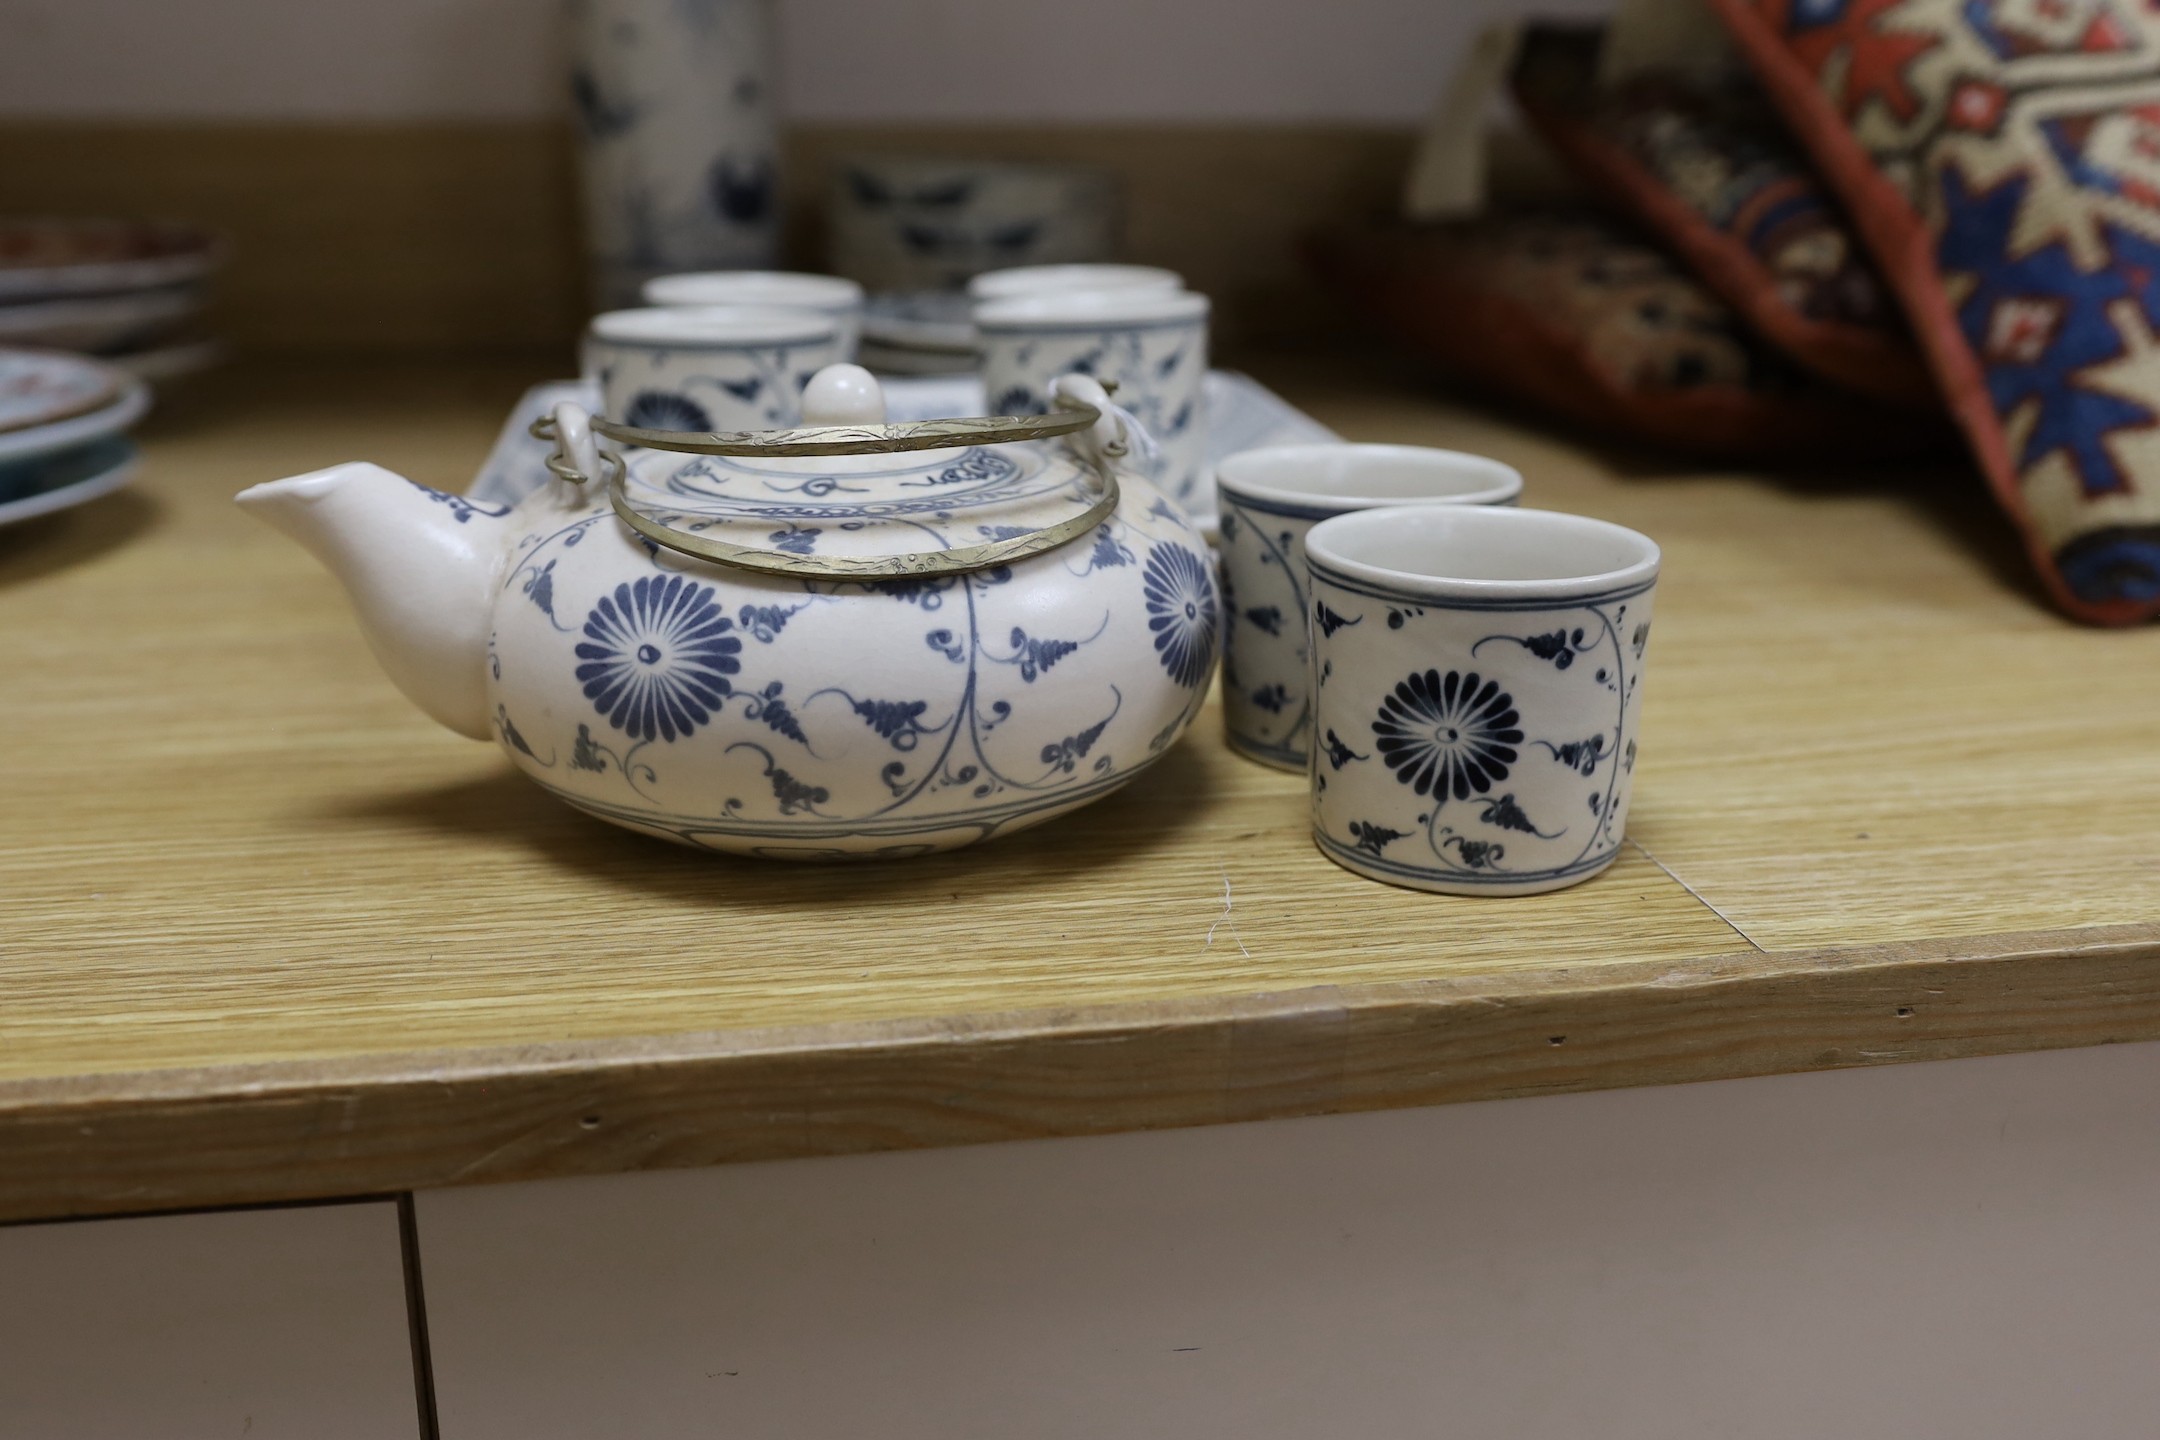 A blue and white tea set